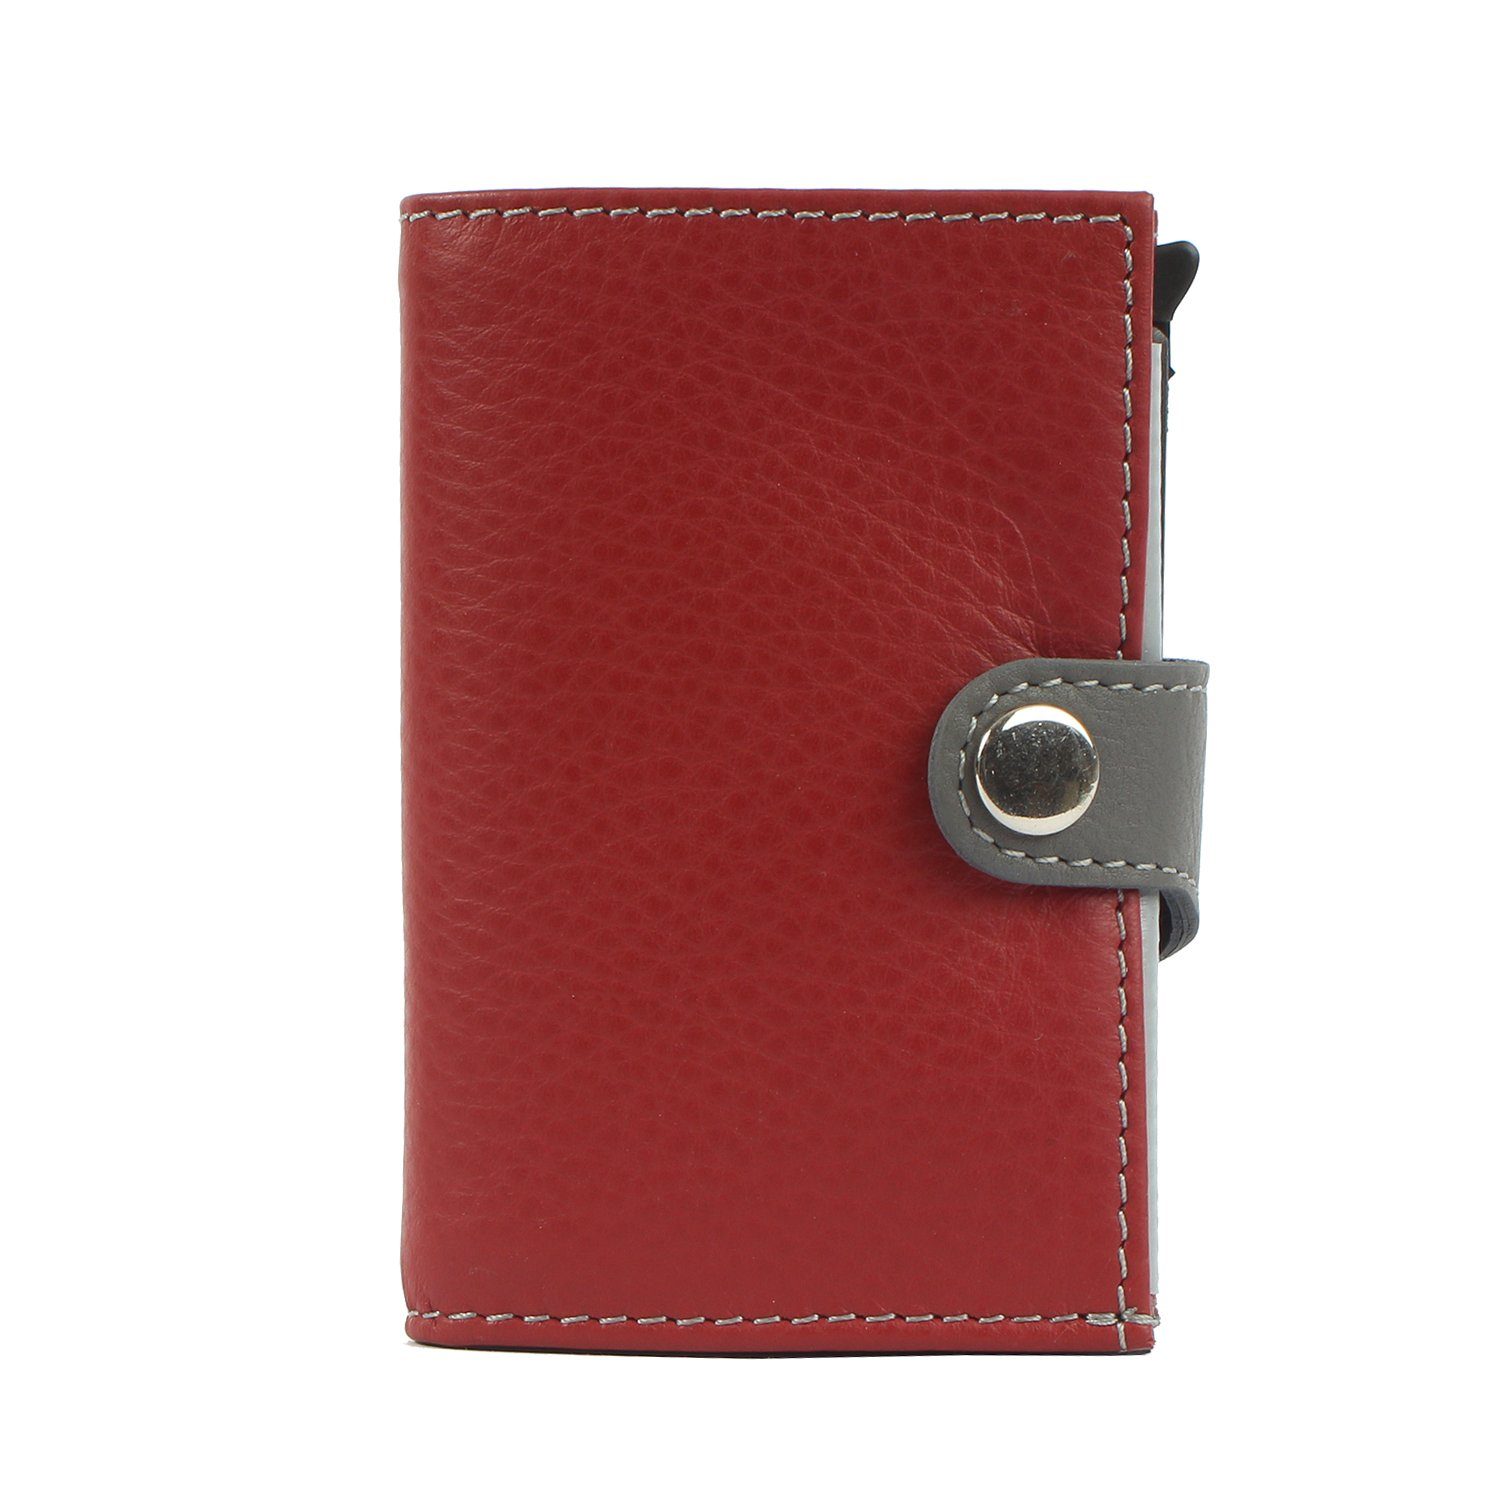 Kreditkartenbörse Geldbörse leather, noonyu single karminrot Upcycling Leder Margelisch Mini aus